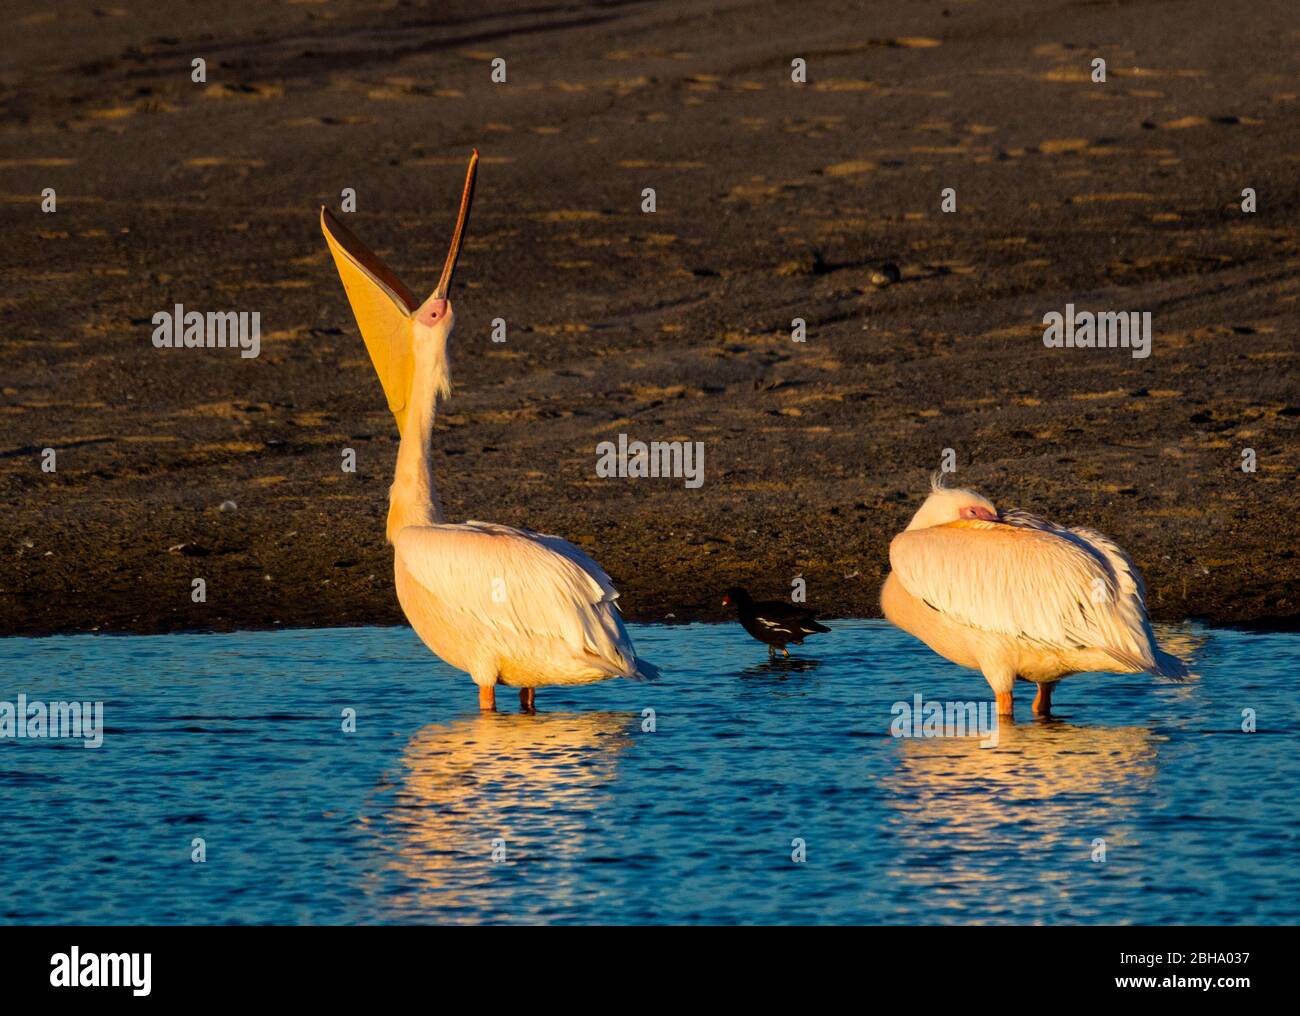 Great white pelicans (Pelecanus onocrotalus) standing in water, Swakopmund, Namibia Stock Photo